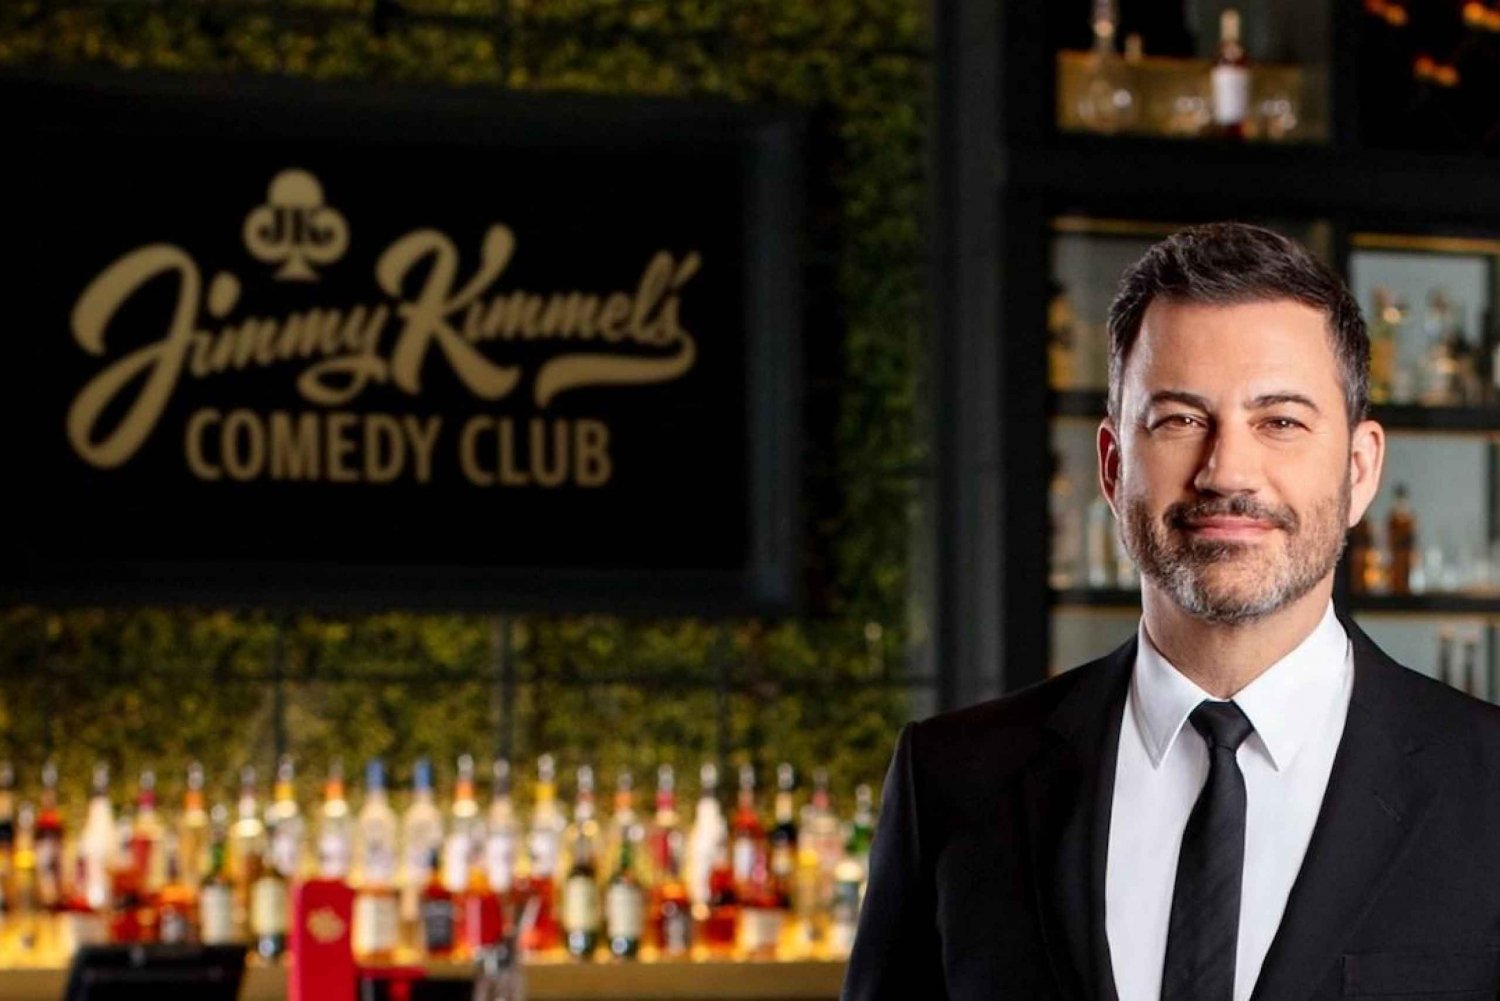 Las Vegas : Jimmy Kimmel's Comedy Club